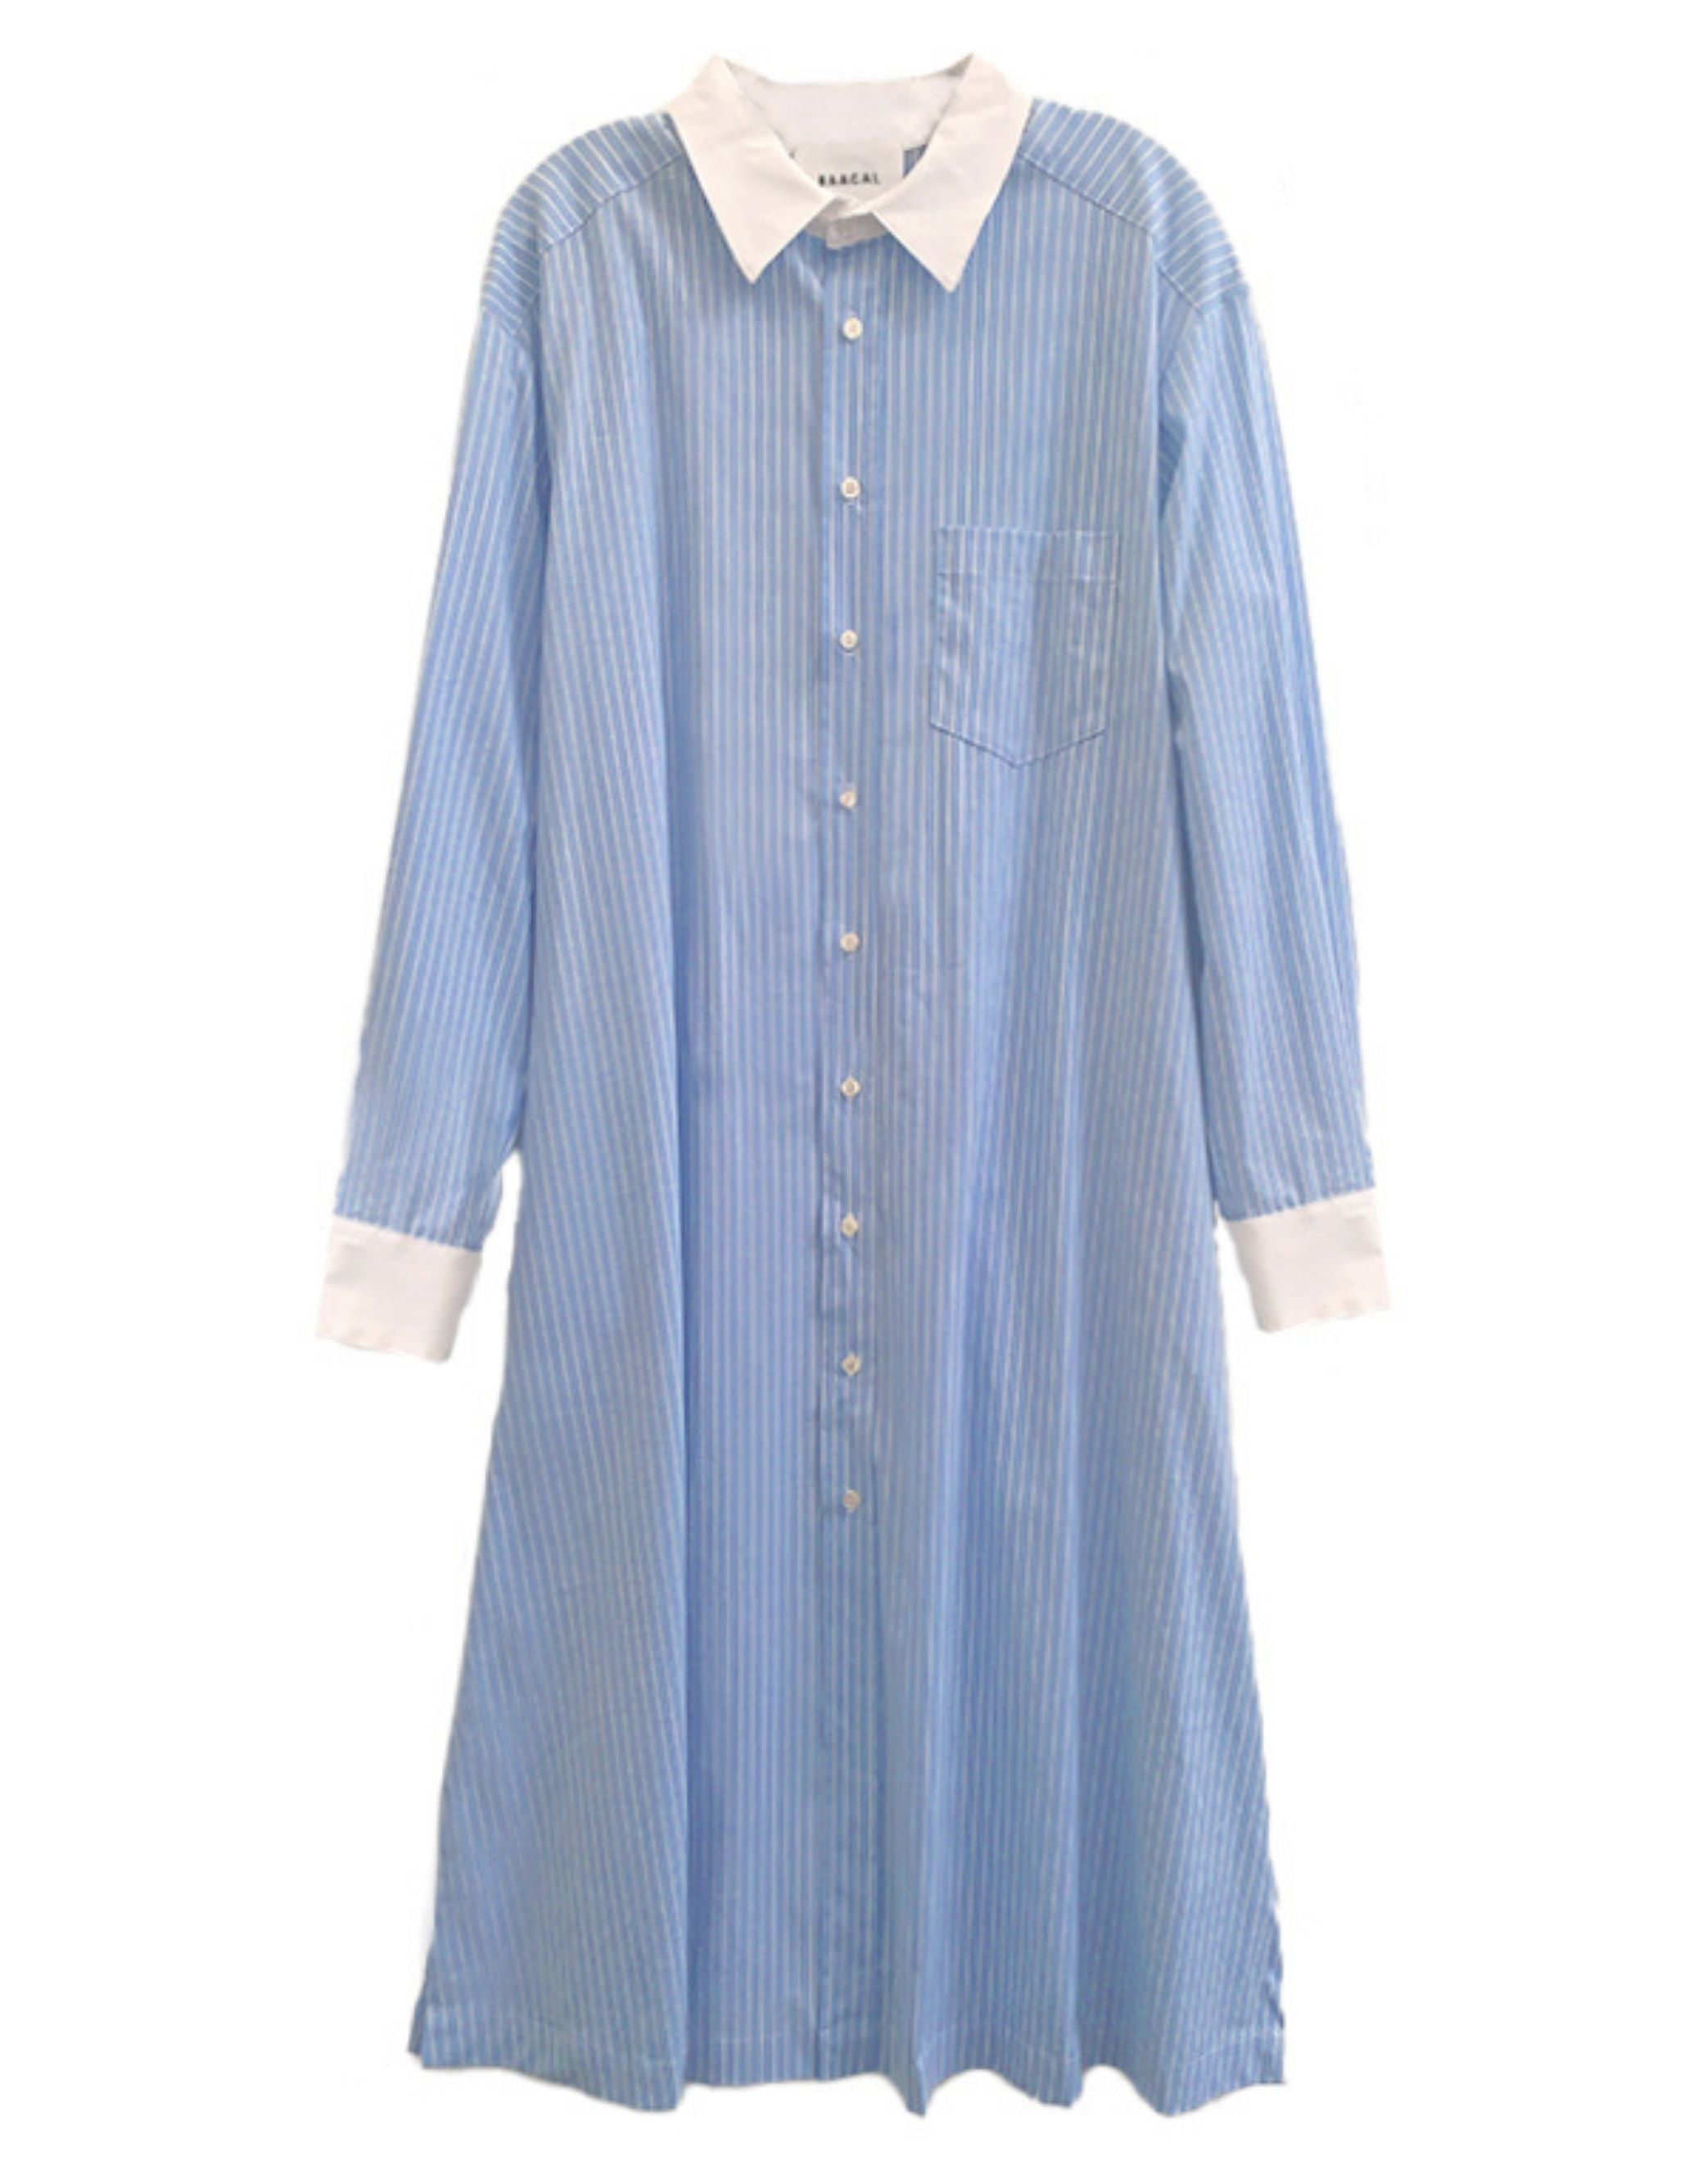 Long Cotton Shirtdress in Blue Stripe